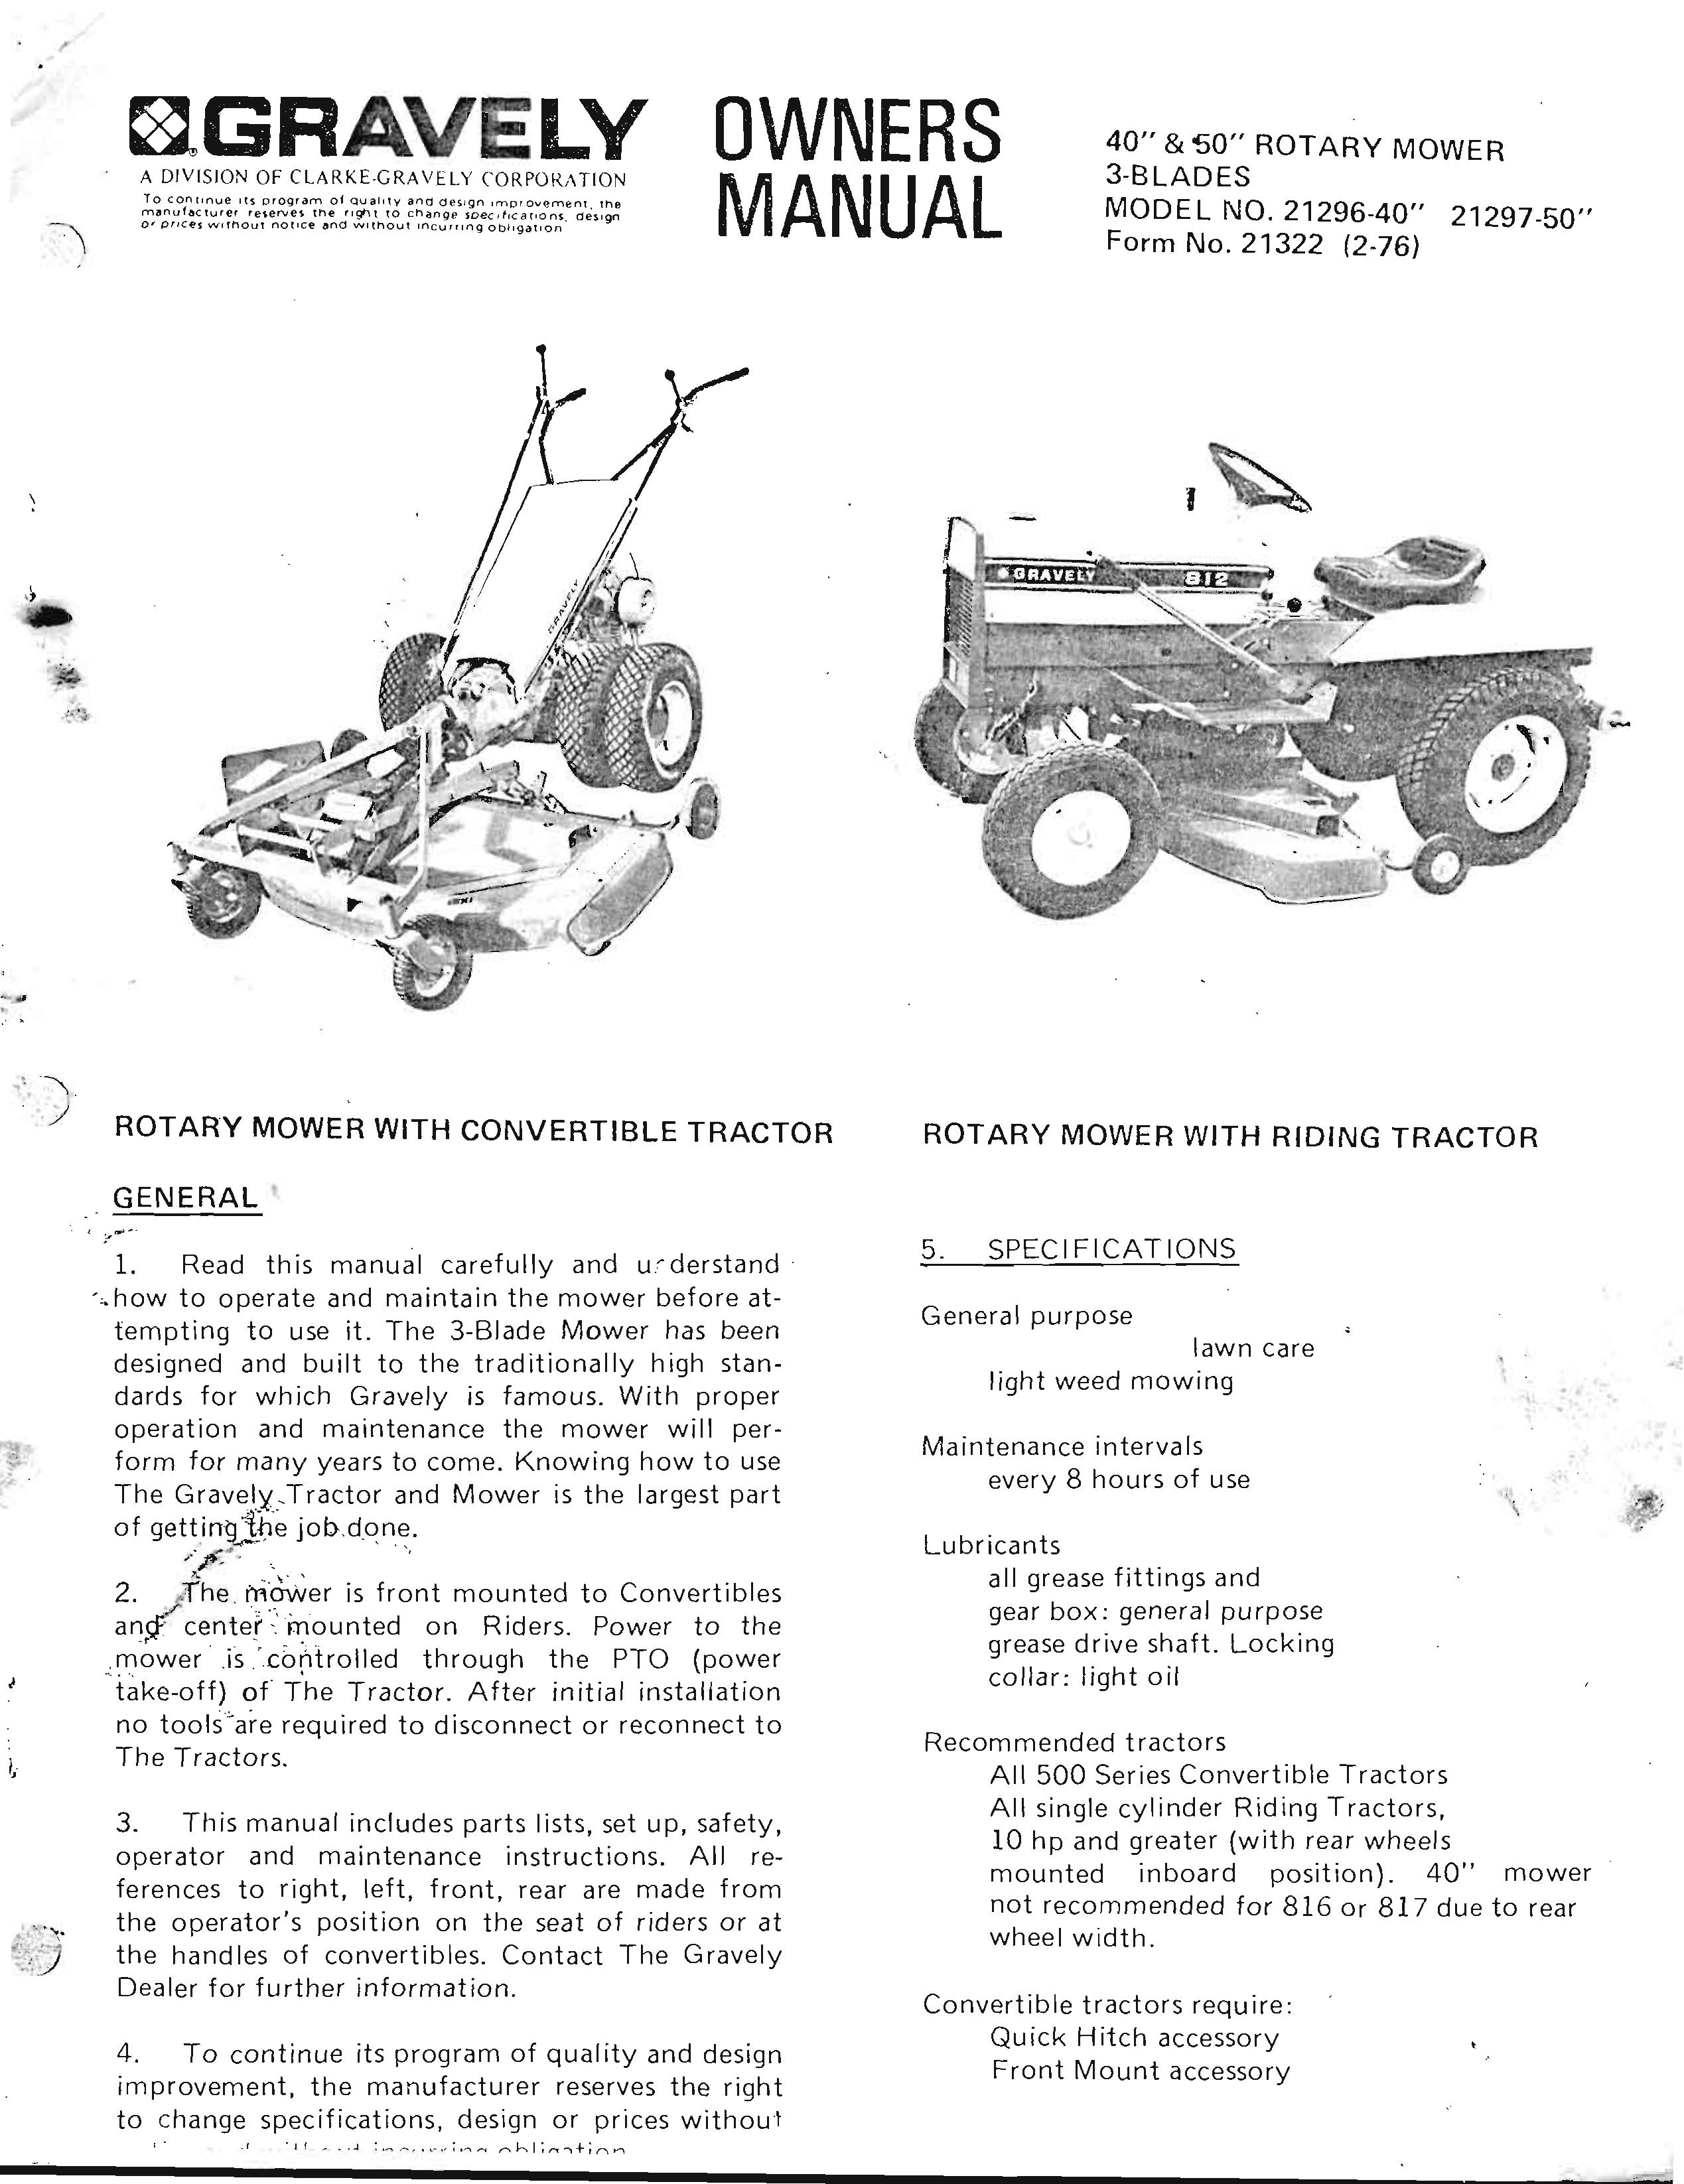 Gravely 21296-40 Lawn Mower User Manual